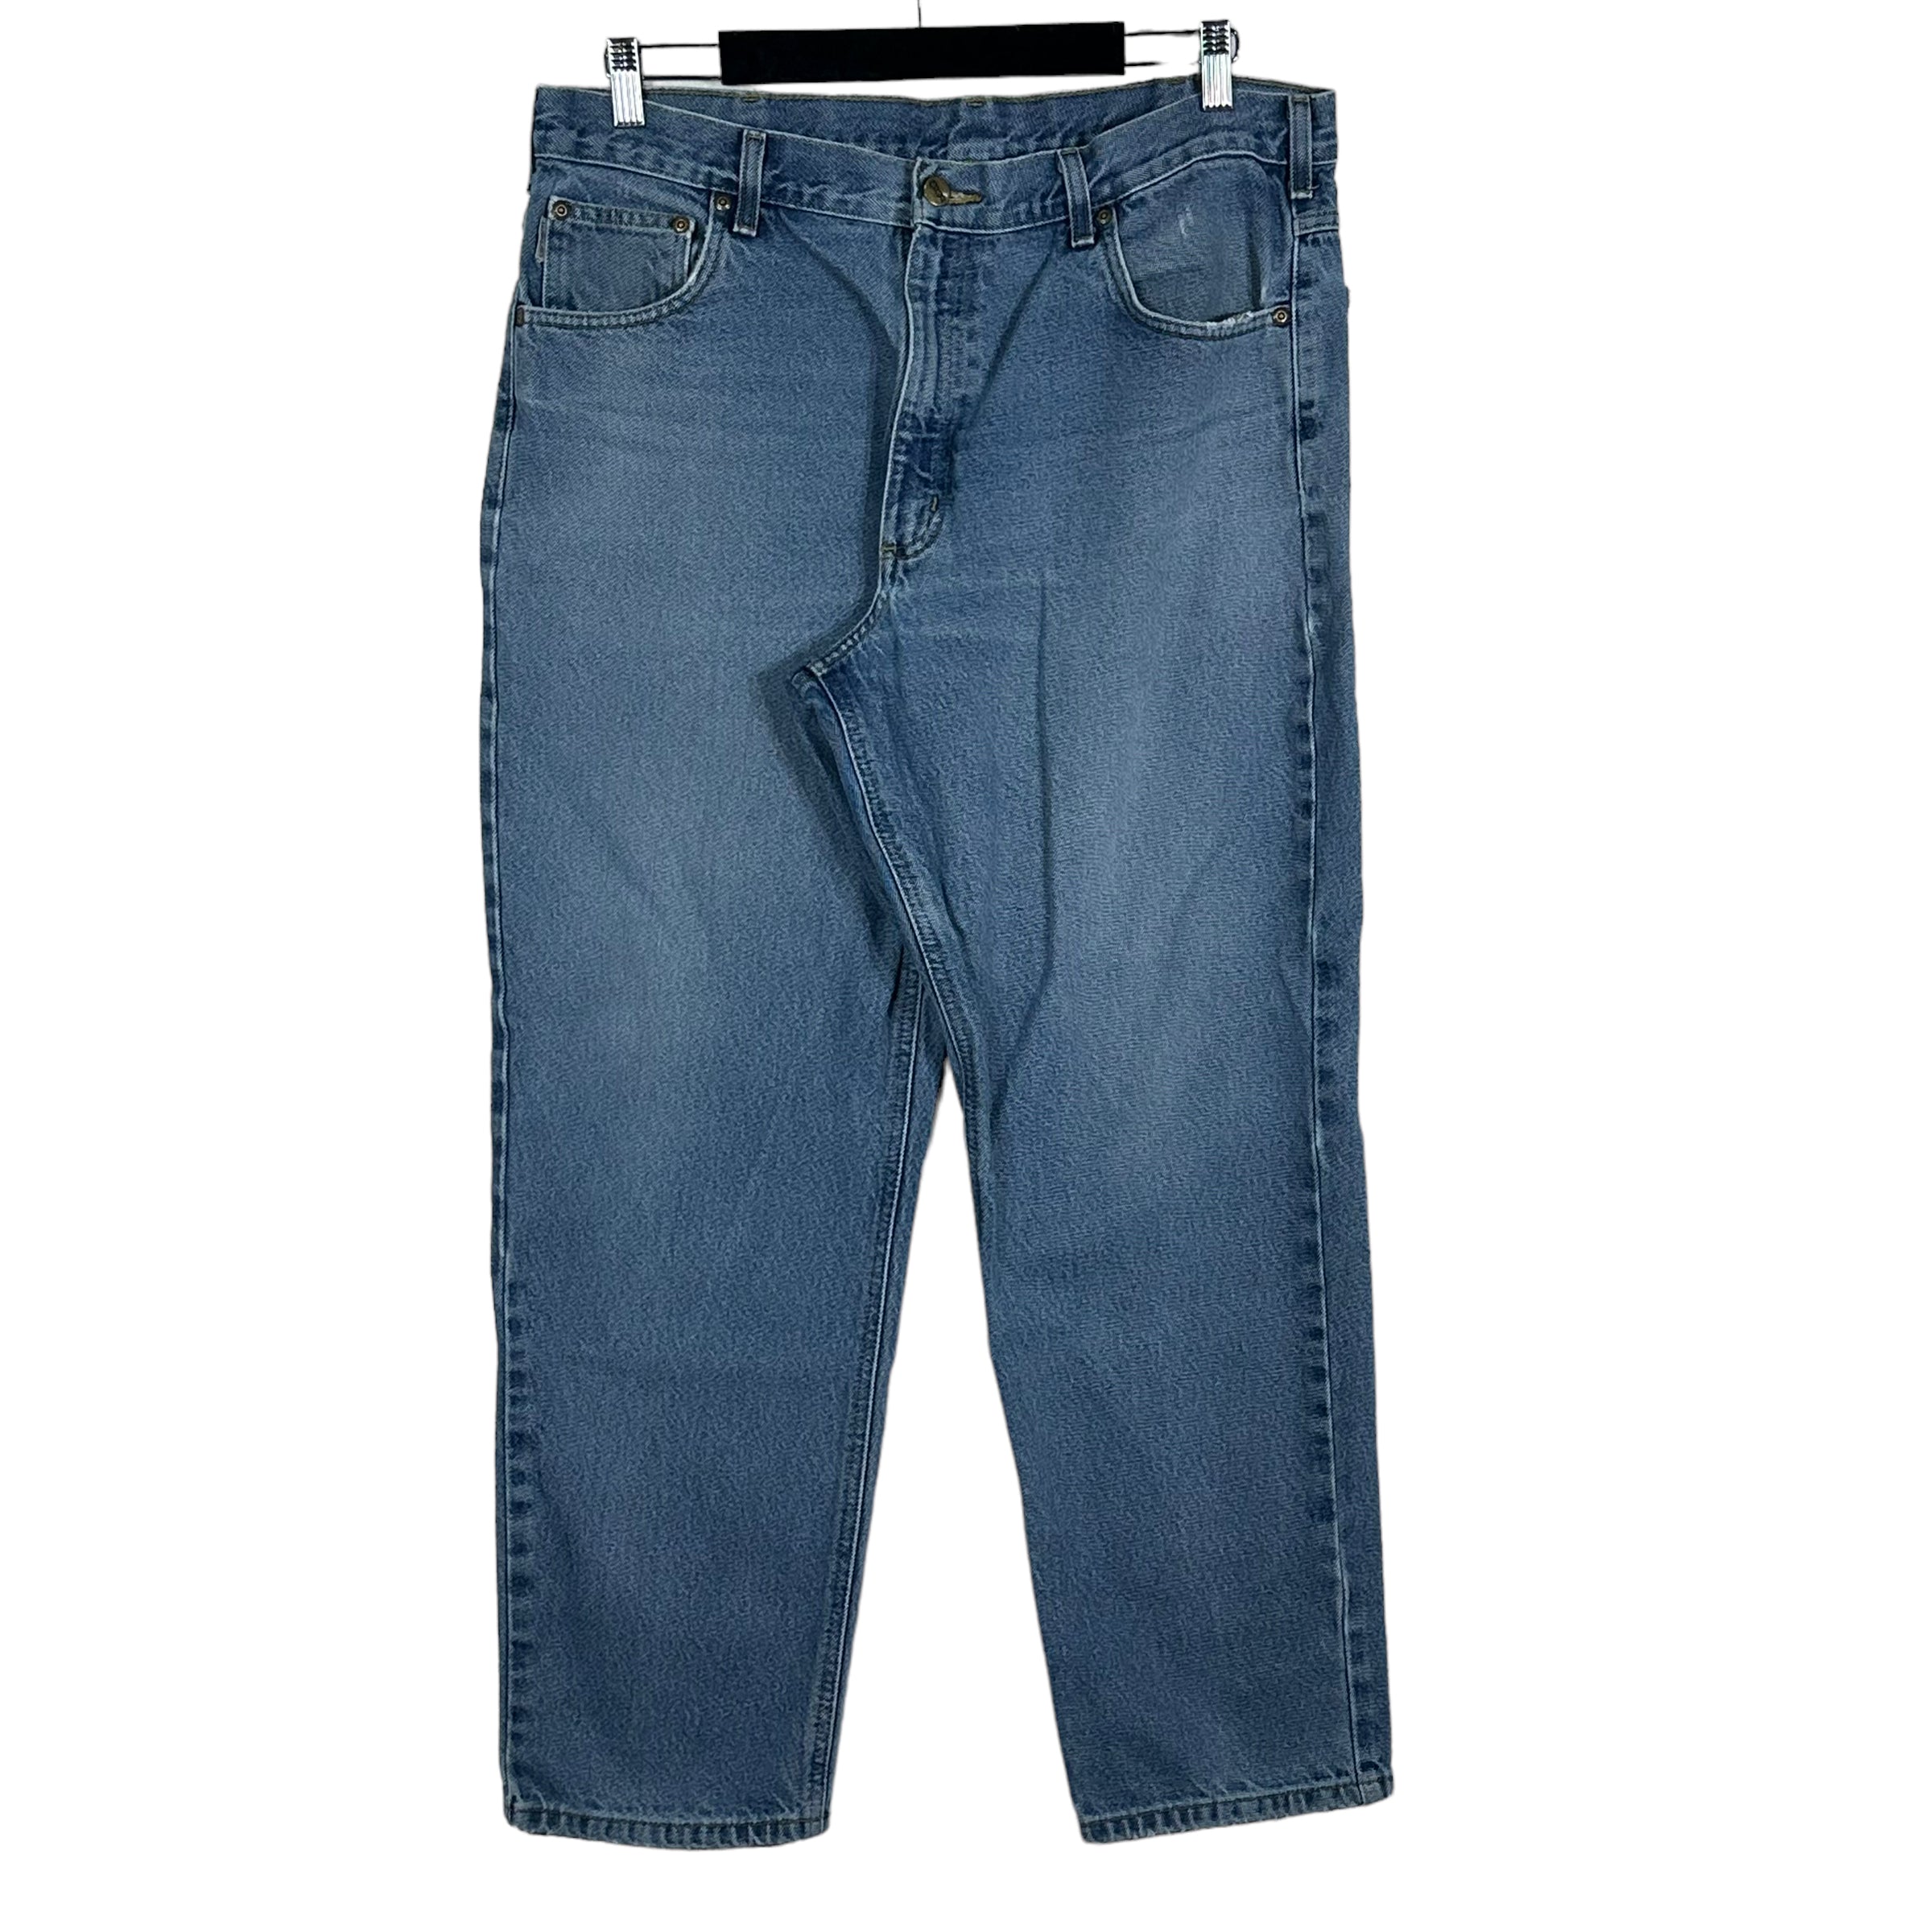 Vintage Carhartt Light Wash Straight Leg Distressed Denim Jeans